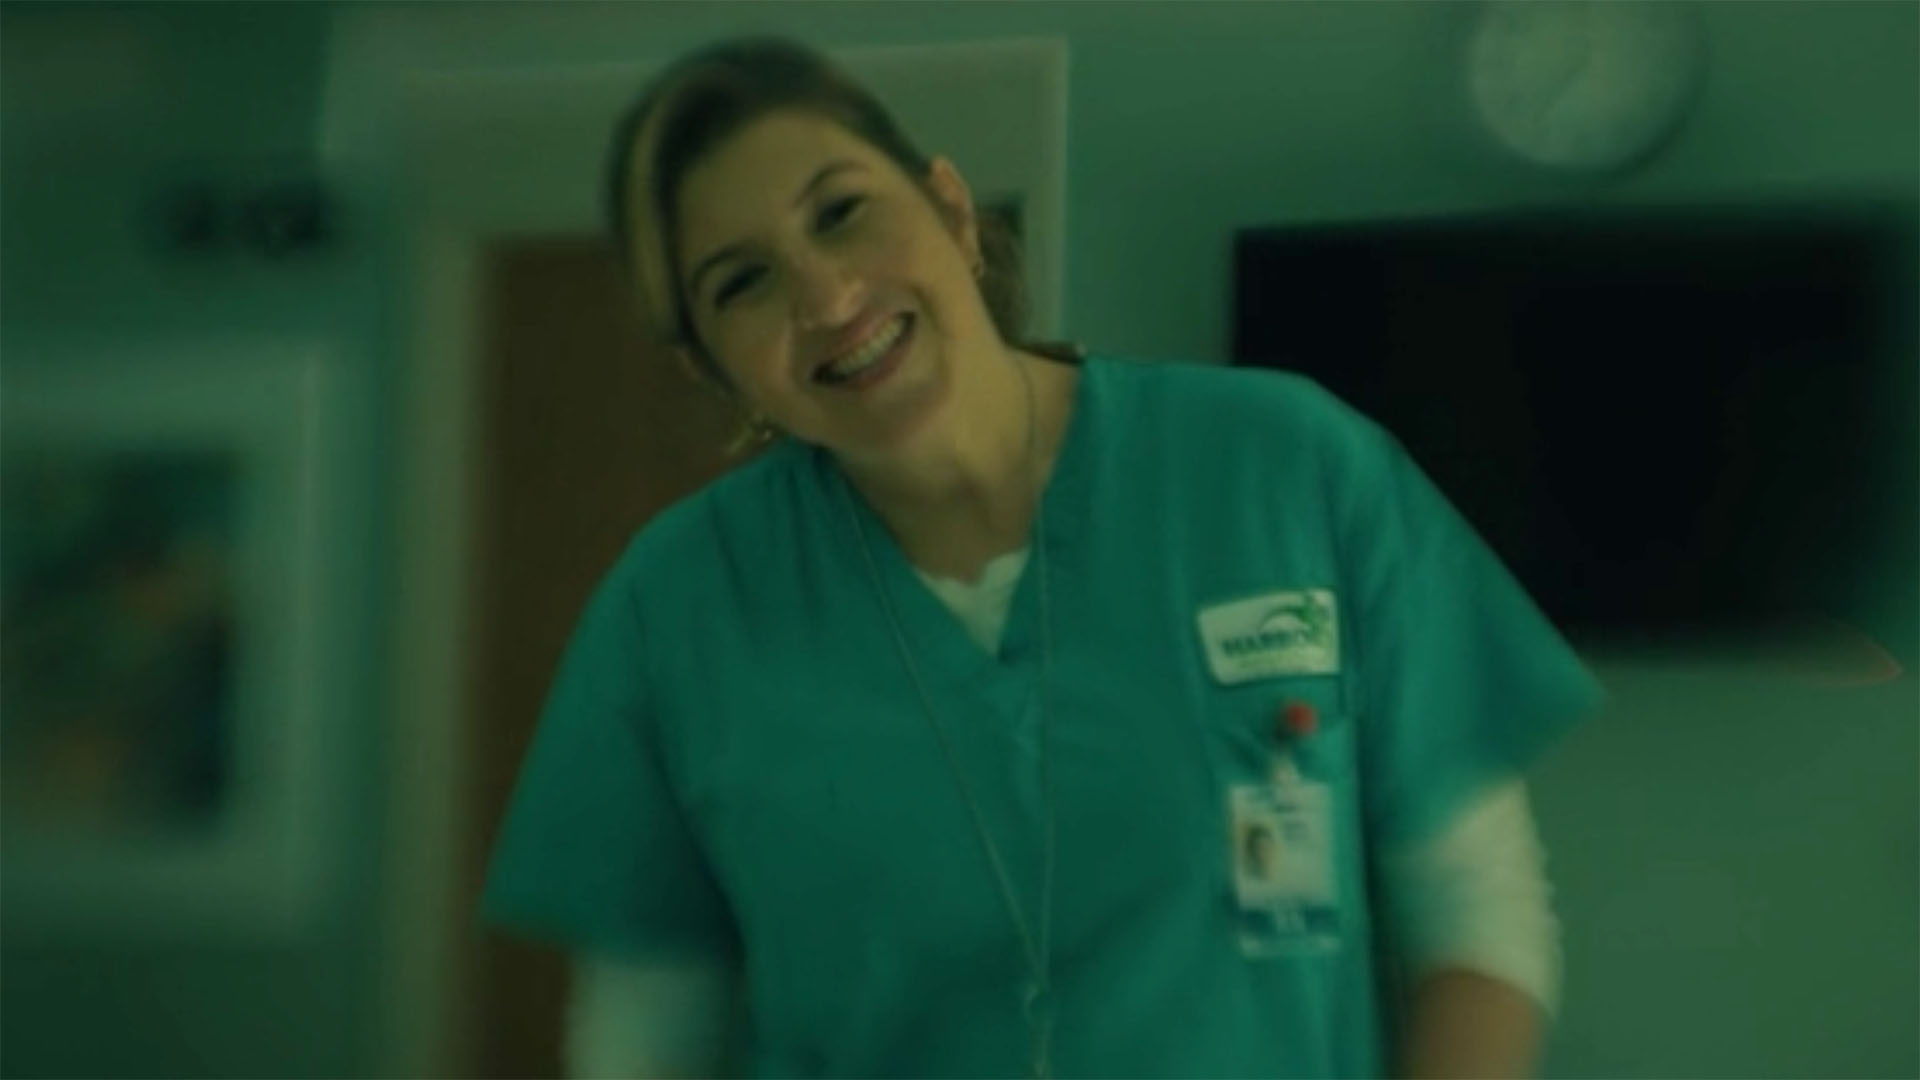 Tara Summers as Nurse Linda Bloch